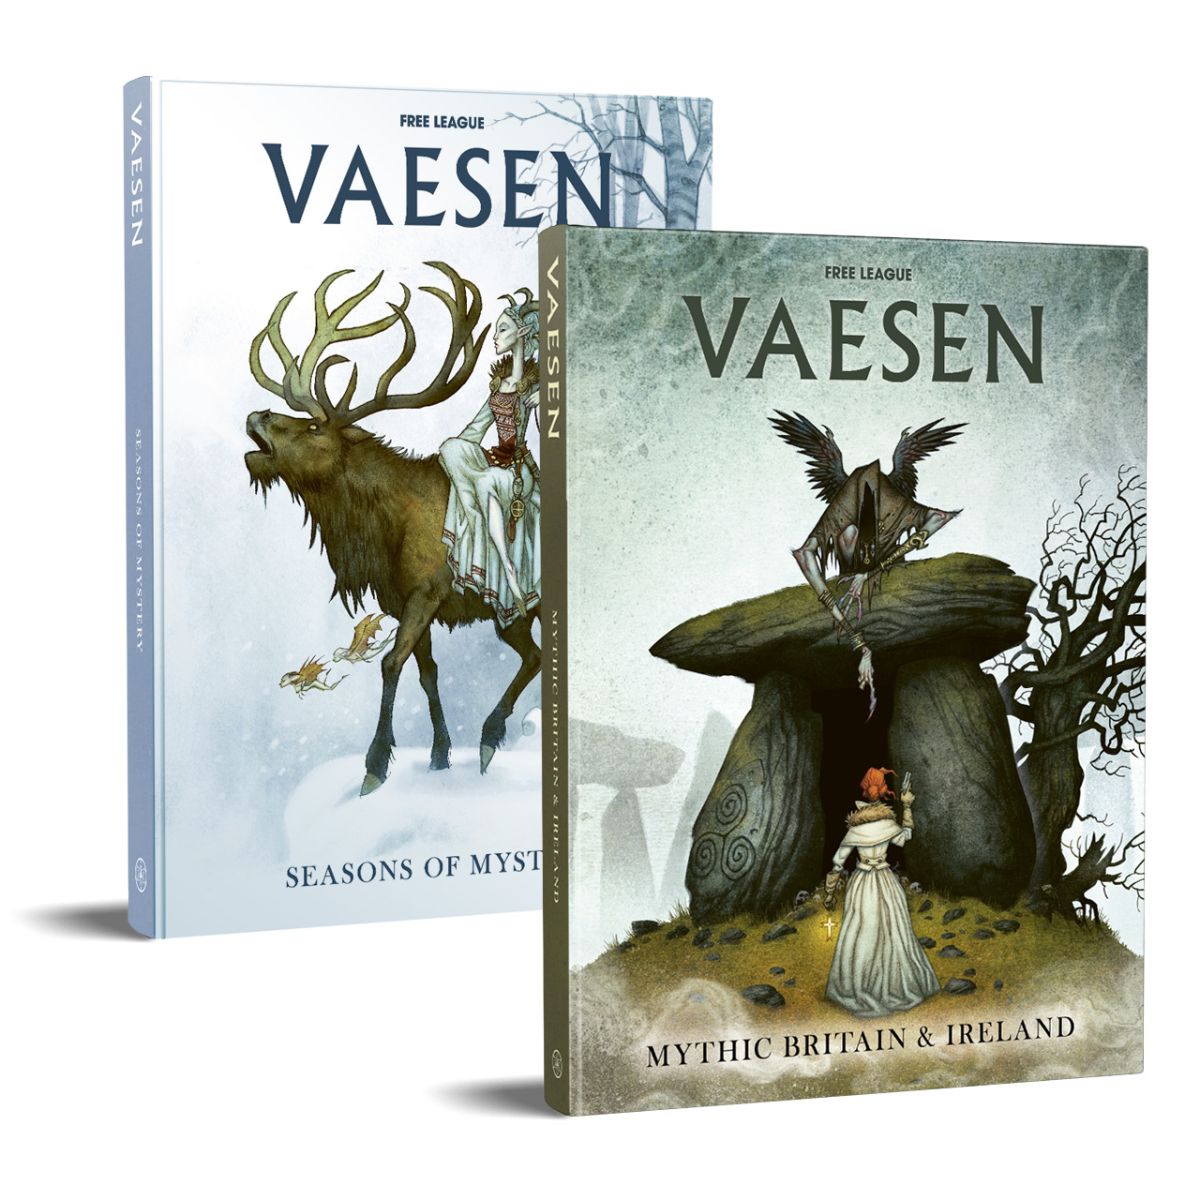 Vaesen - Image One